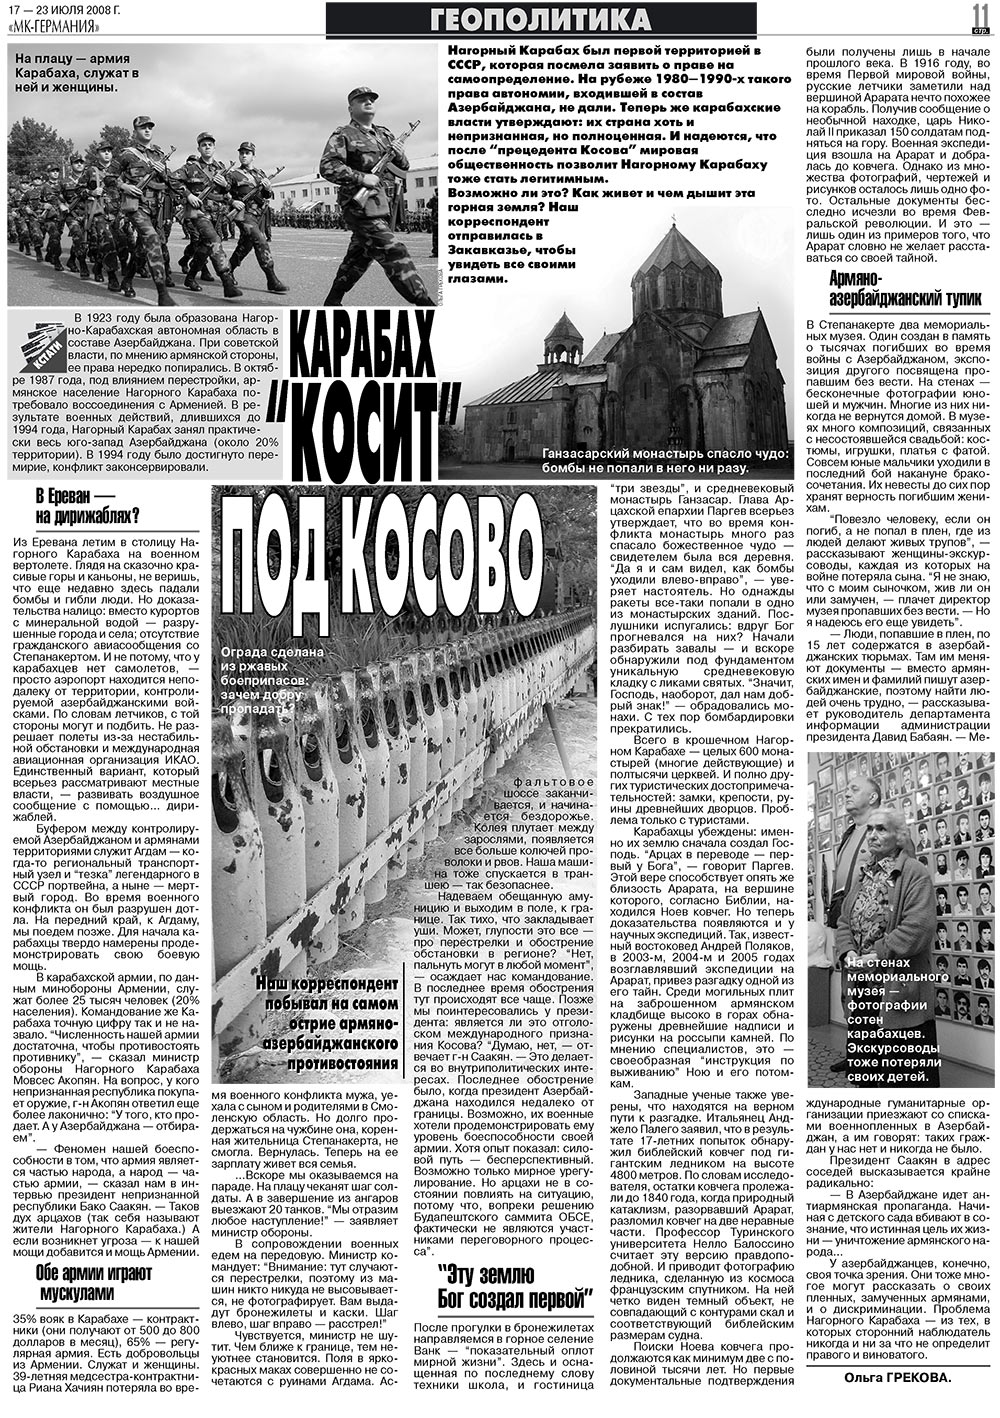 МК-Германия, газета. 2008 №29 стр.11